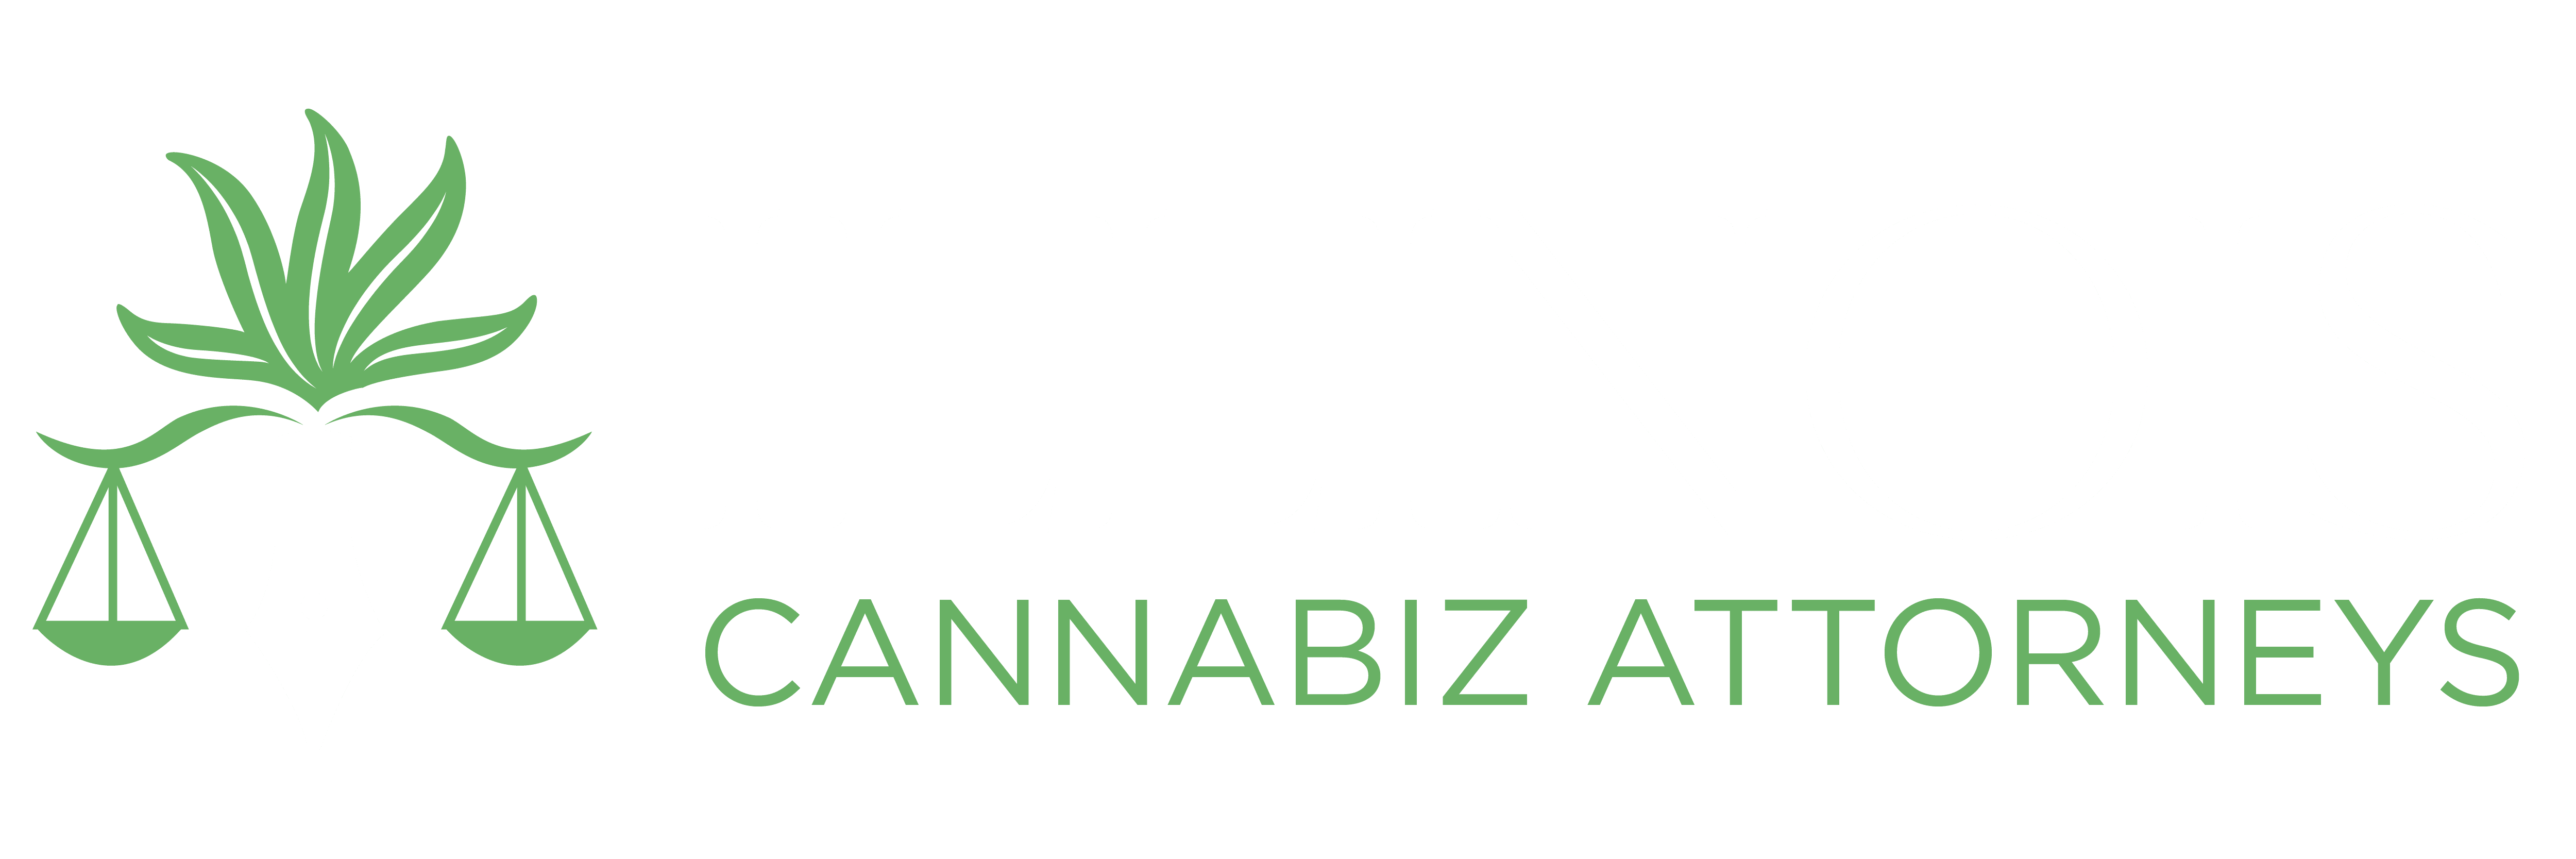 Marijuana cannabis business law firm illinois